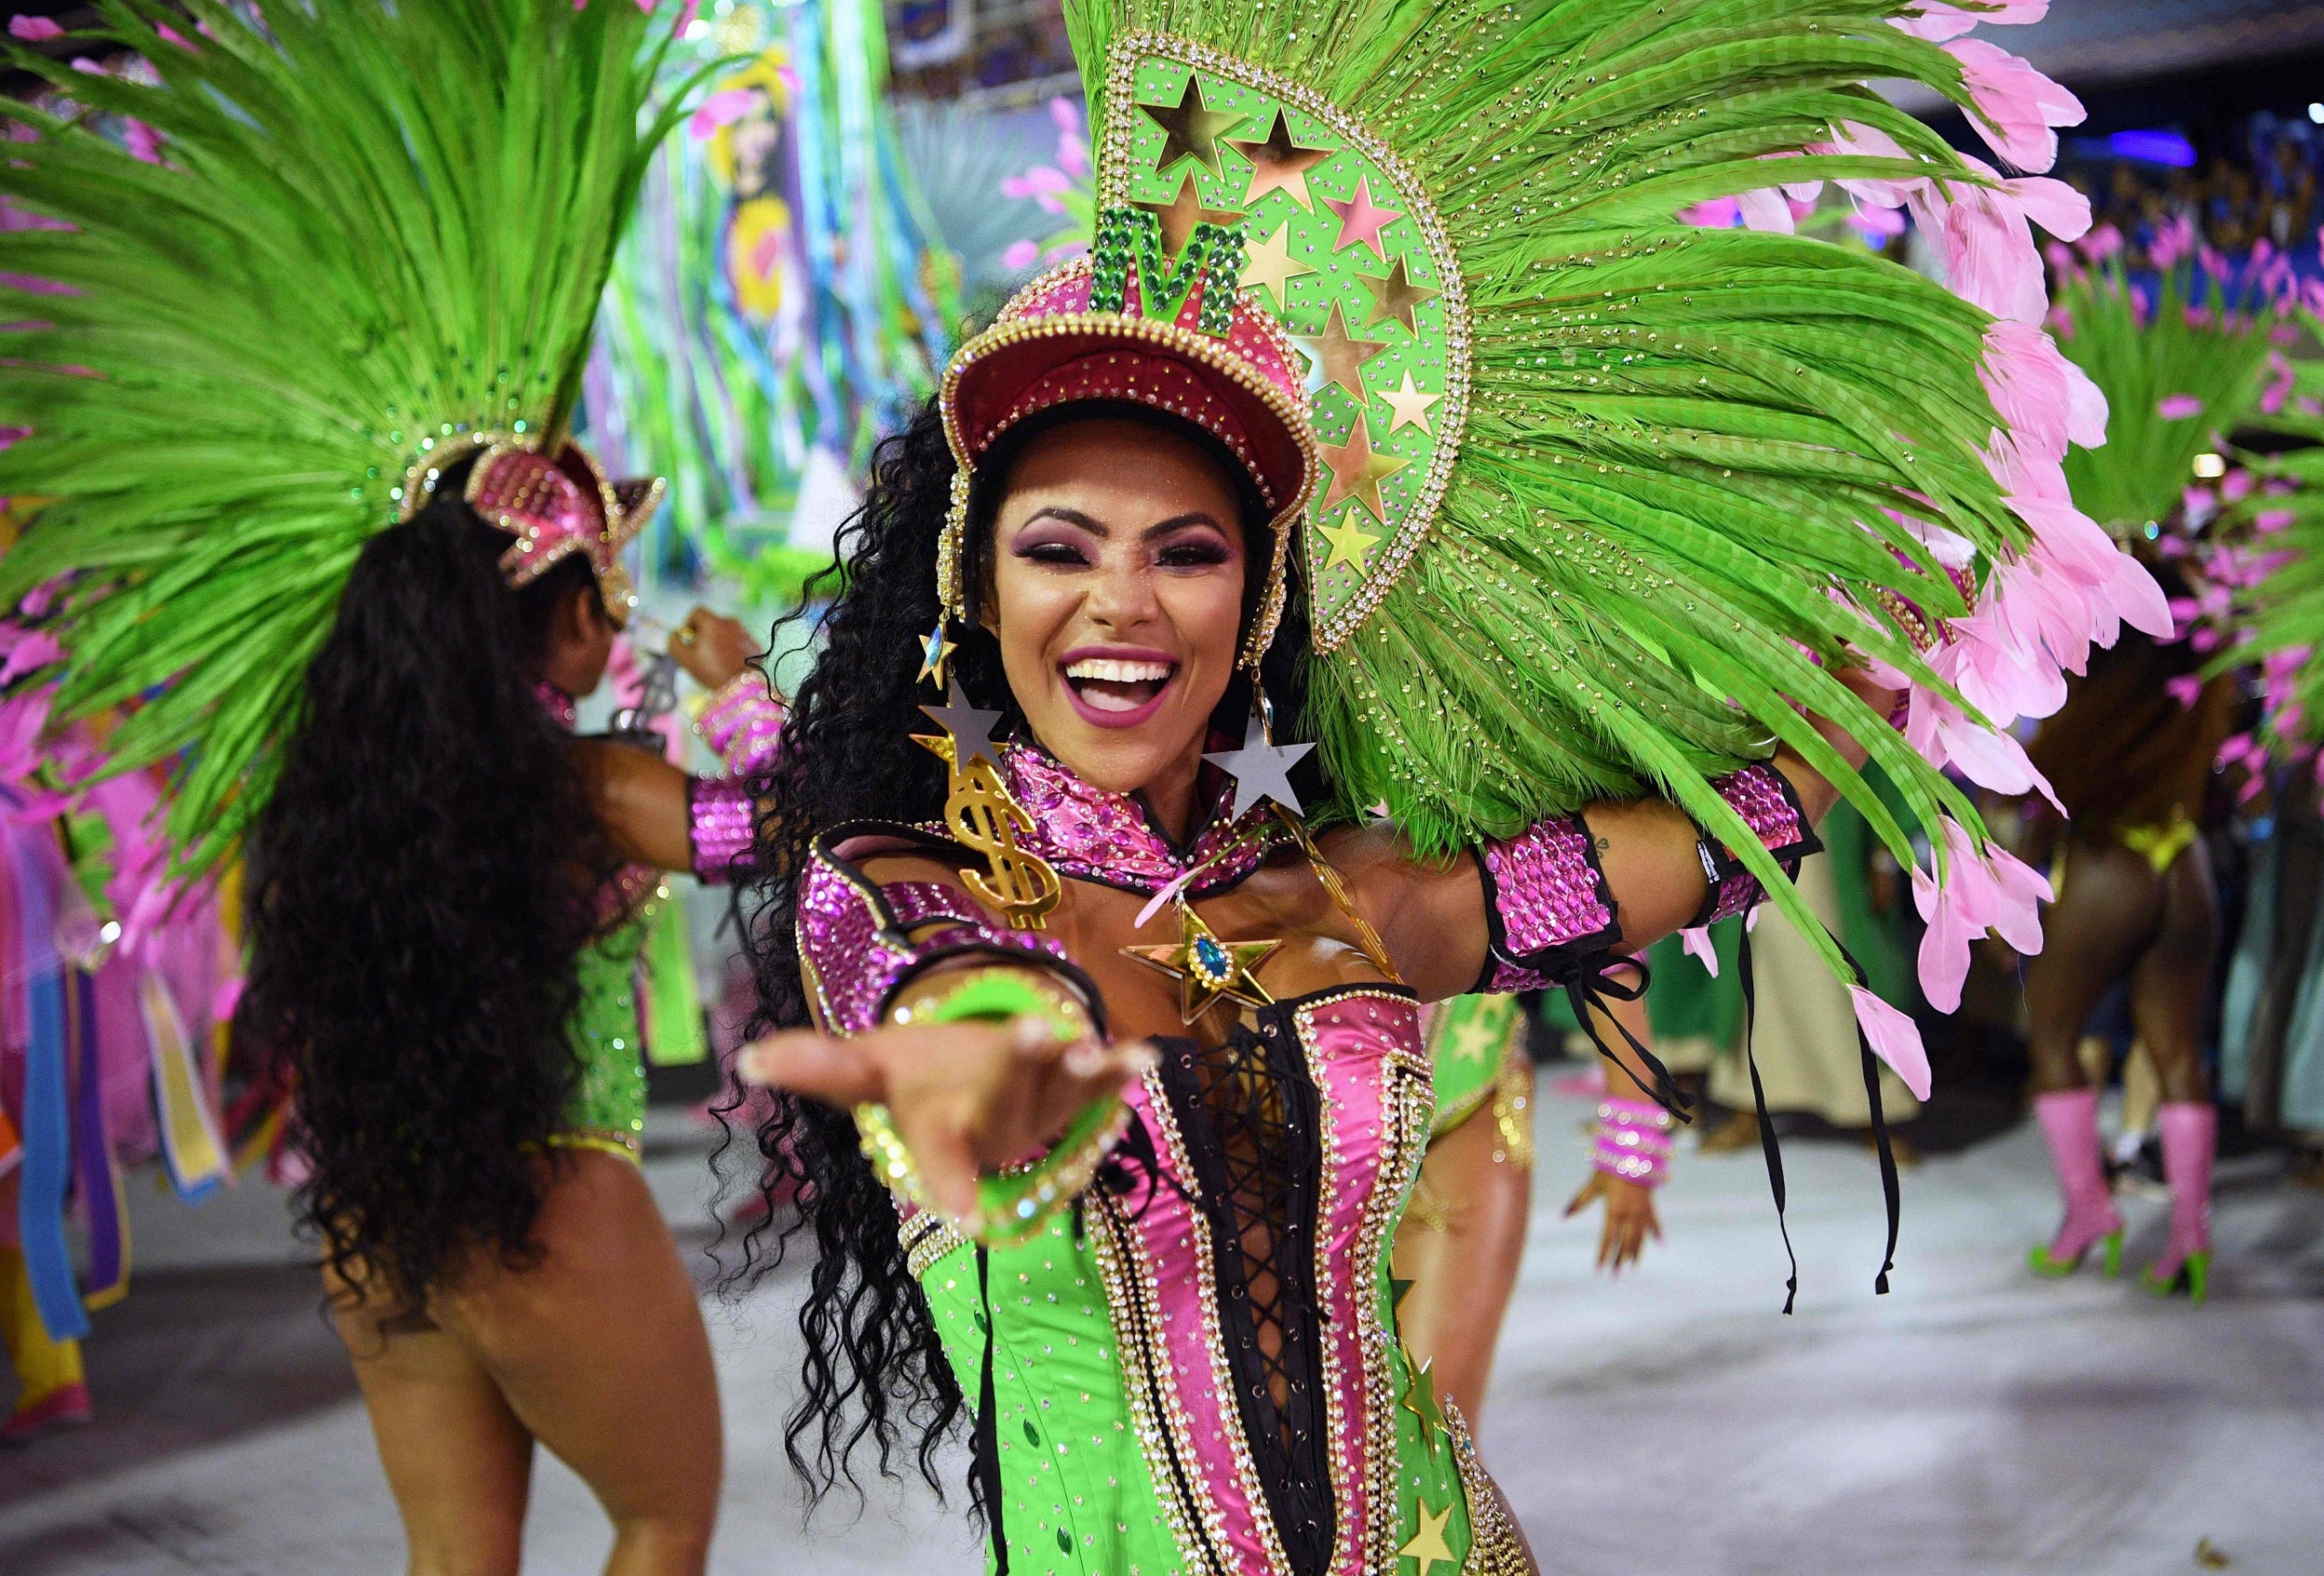 Rio rio brazilian. Карнавал в Рио-де-Жанейро. Бразилия фестиваль Рио де Жанейро. Бразилия парад в Рио де Жанейро. Карнавал в Рио-де-Жанейро (Rio Carnival) - Бразилия.